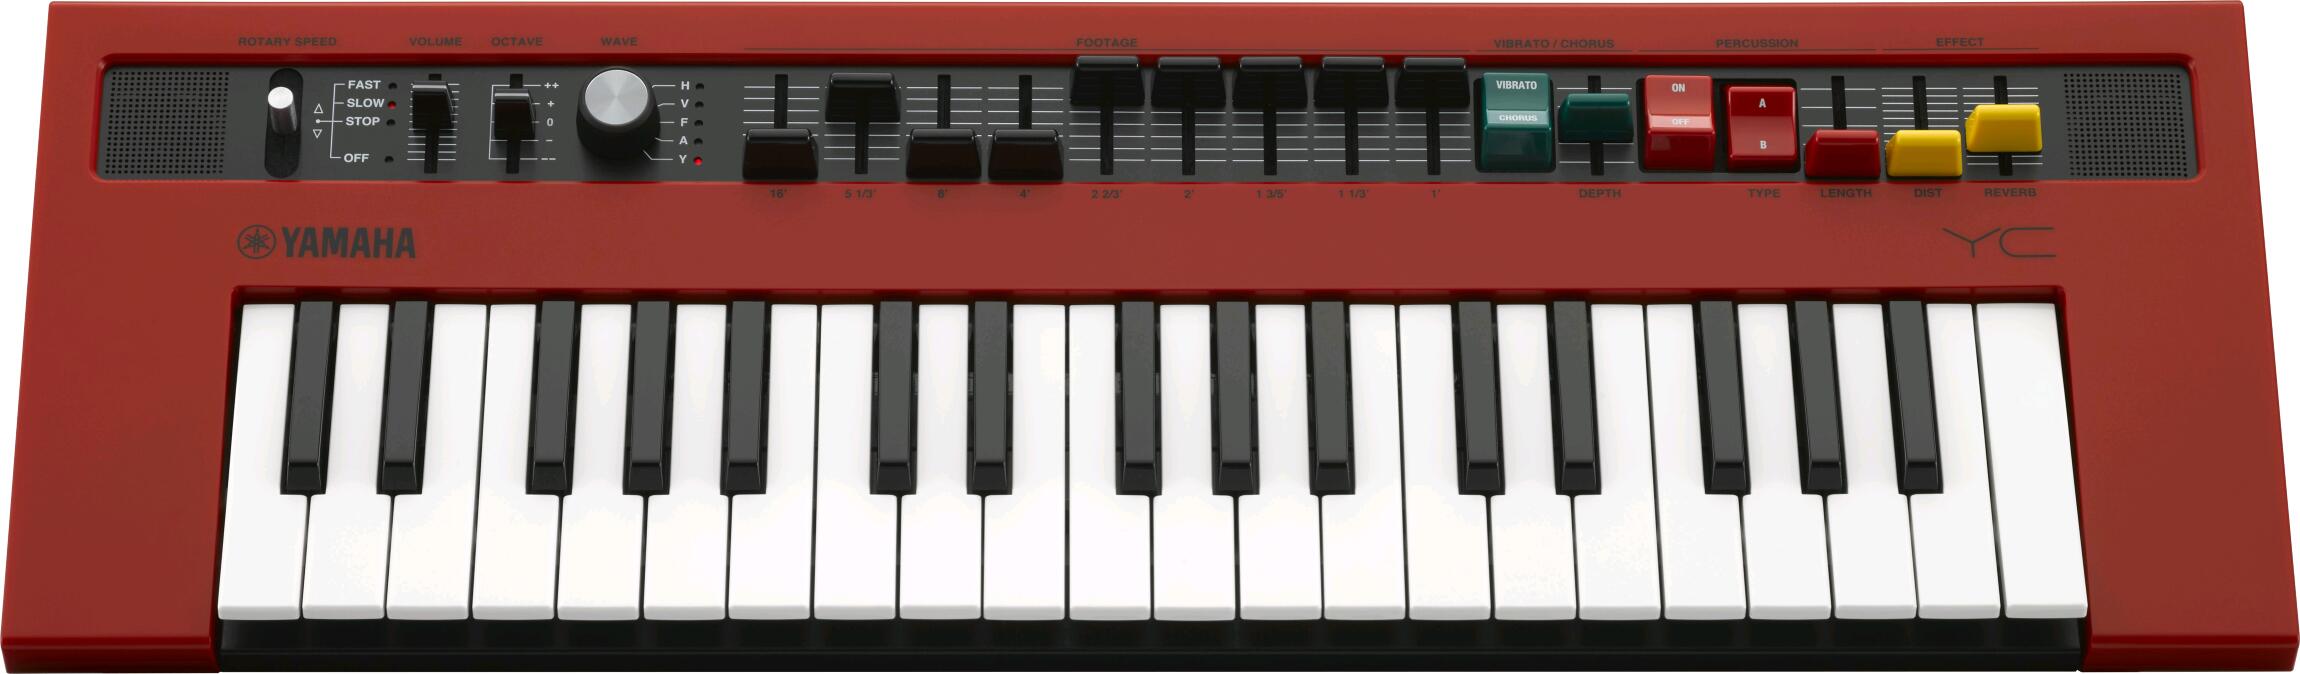 Yamaha Reface YC Mini keyboard : photo 1